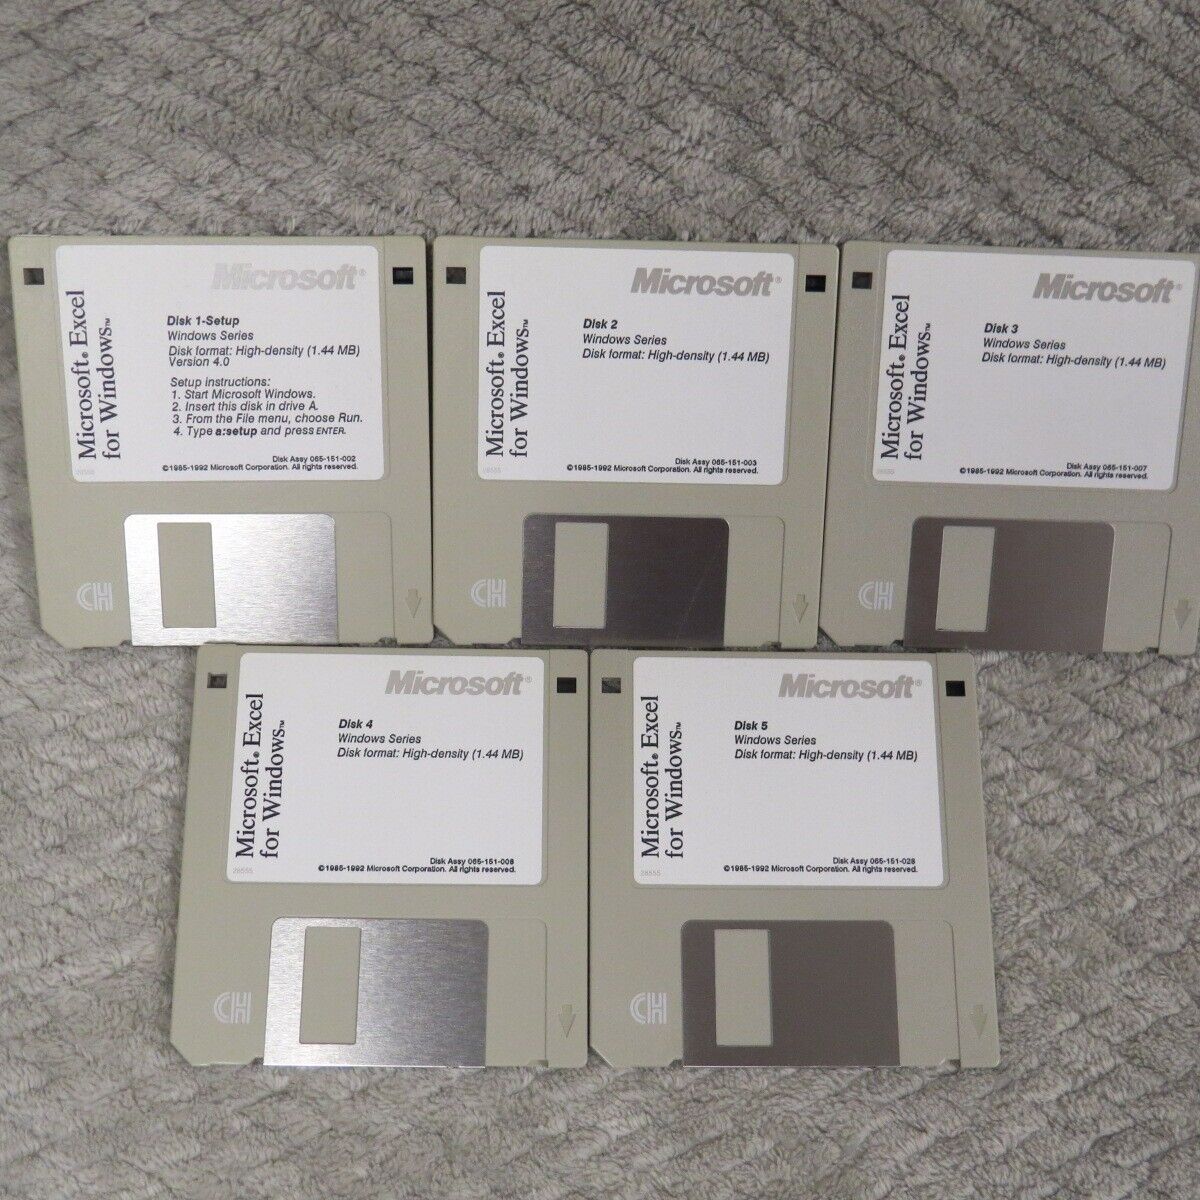 VTG Microsoft Excel For Windows Version 4.0 1985-1992 Floppy Disk 1-5 Included